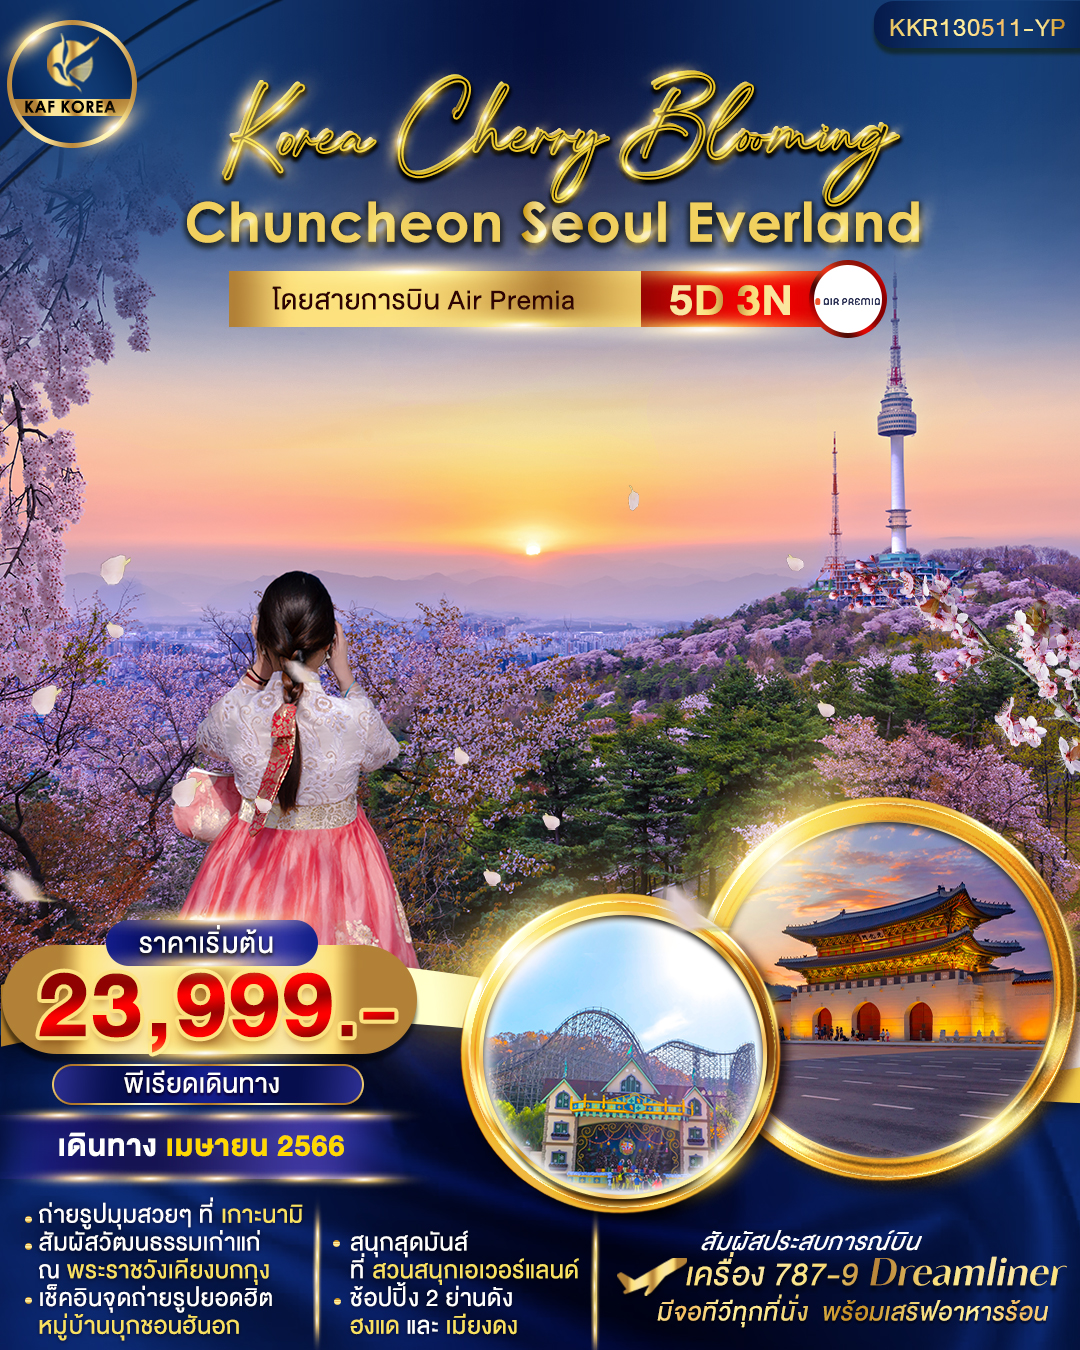  Korea Cherry Blooming Chuncheon Seoul Everland